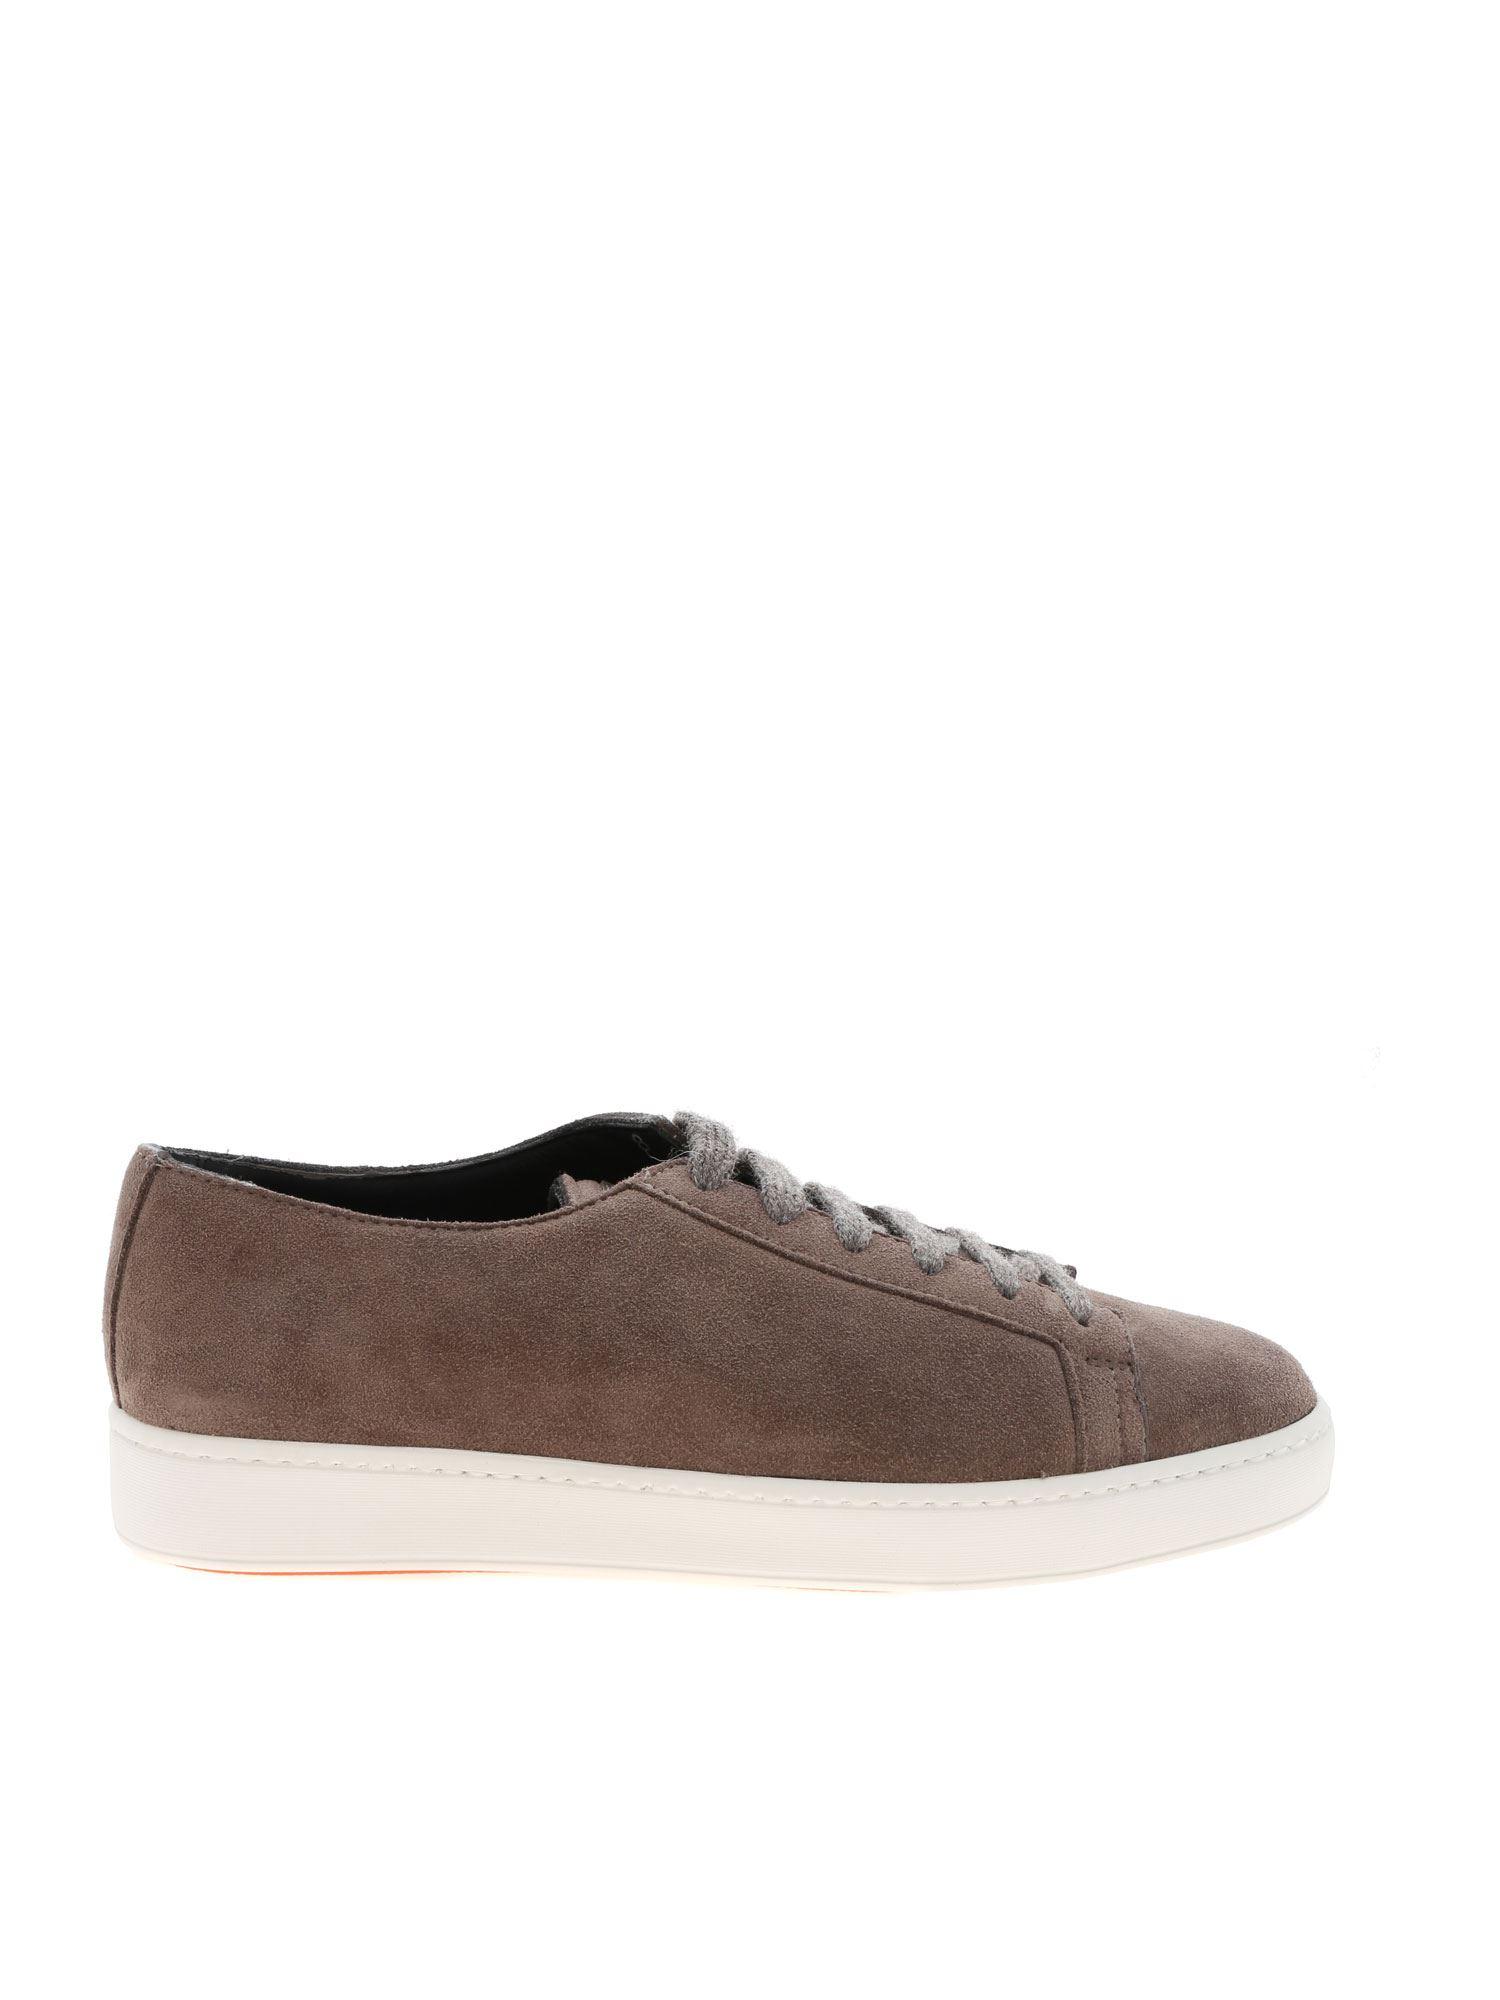 Santoni Suede Sneakers In Dove Grey Color in Gray for Men - Lyst